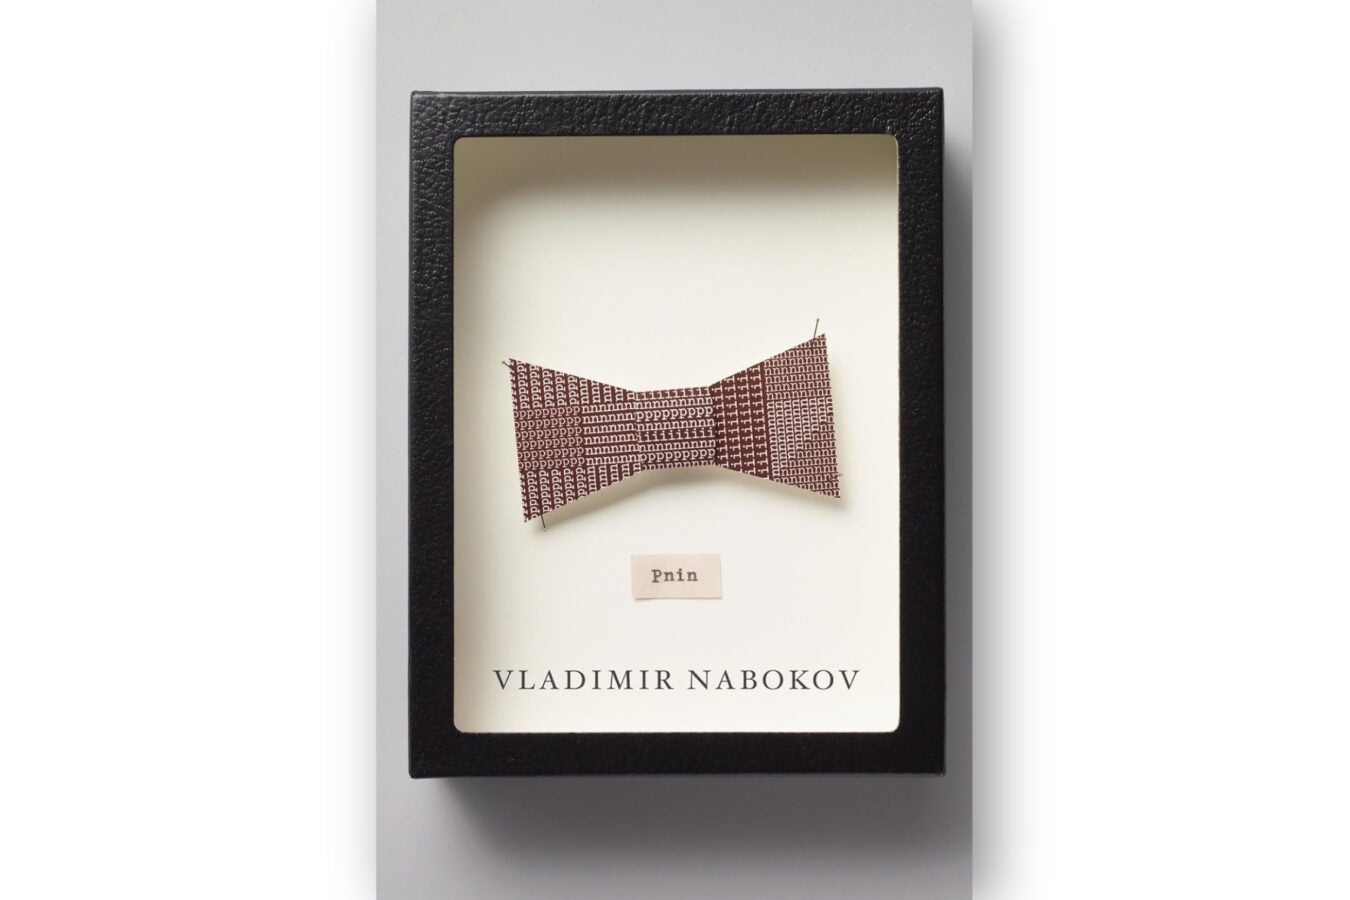 Kitap kapağı: "Pnin" Vladimir Nabokov'un yazısı.